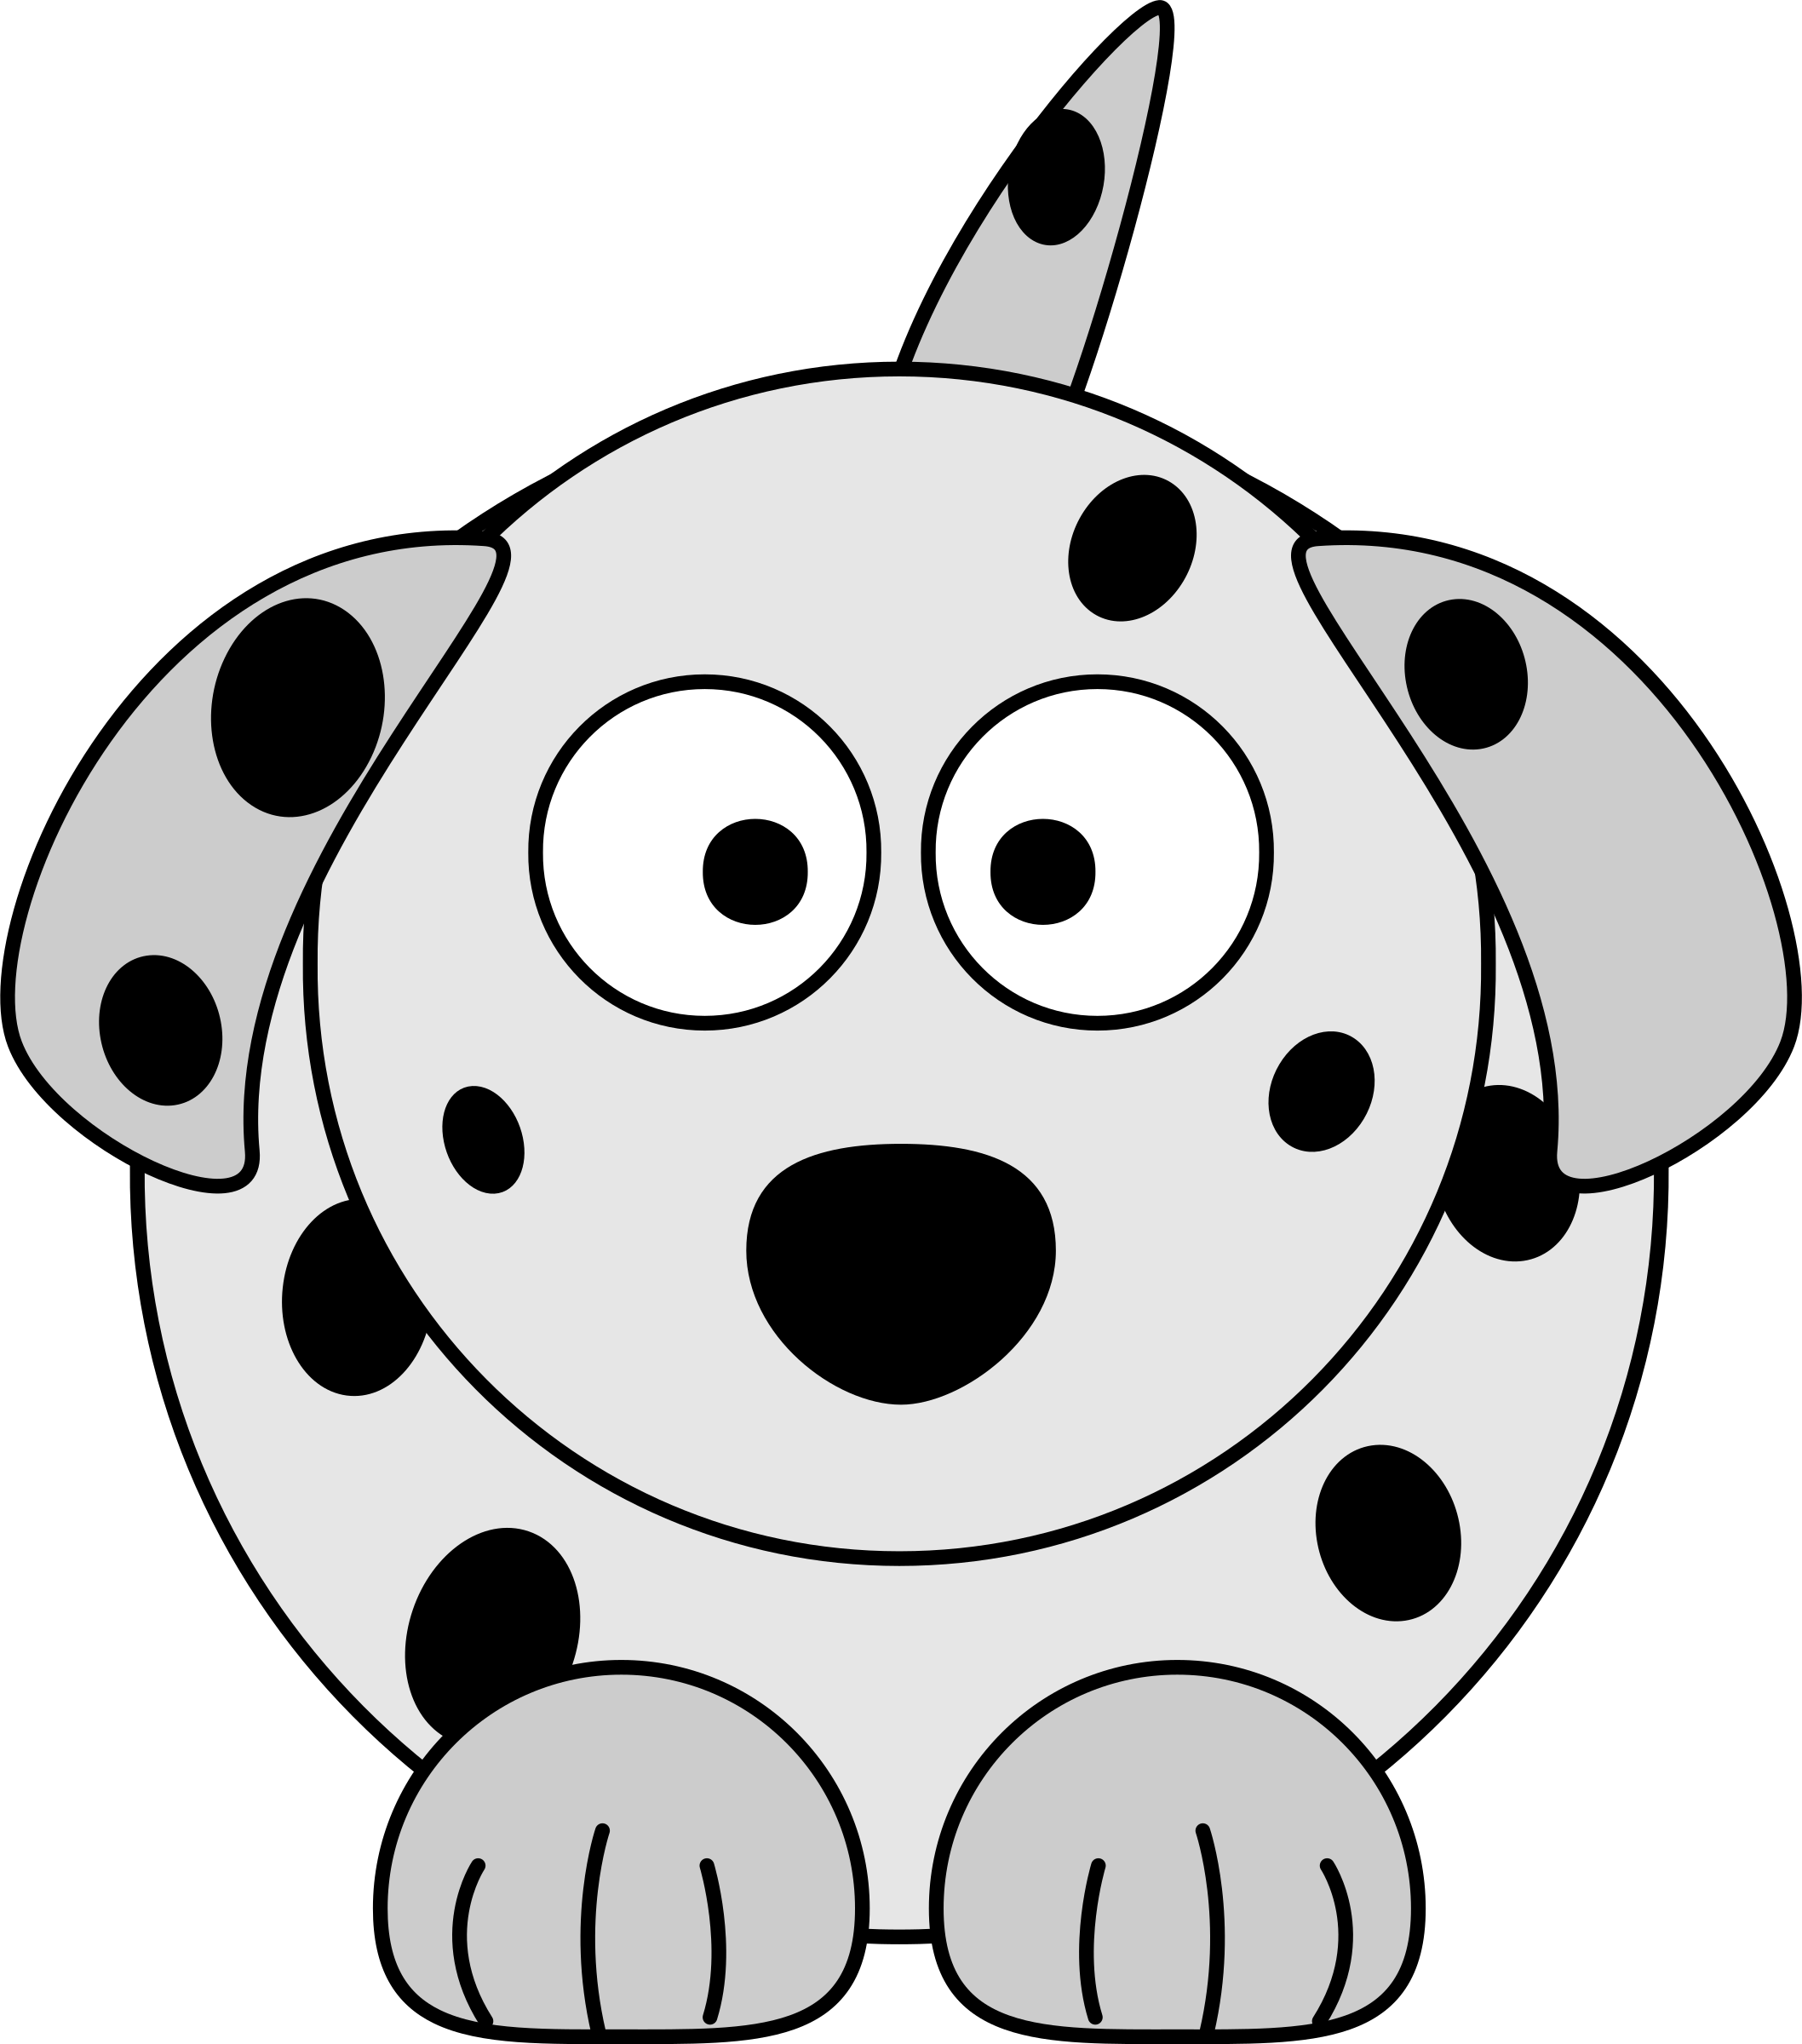 Dog big image png. Dalmatian clipart cartoon